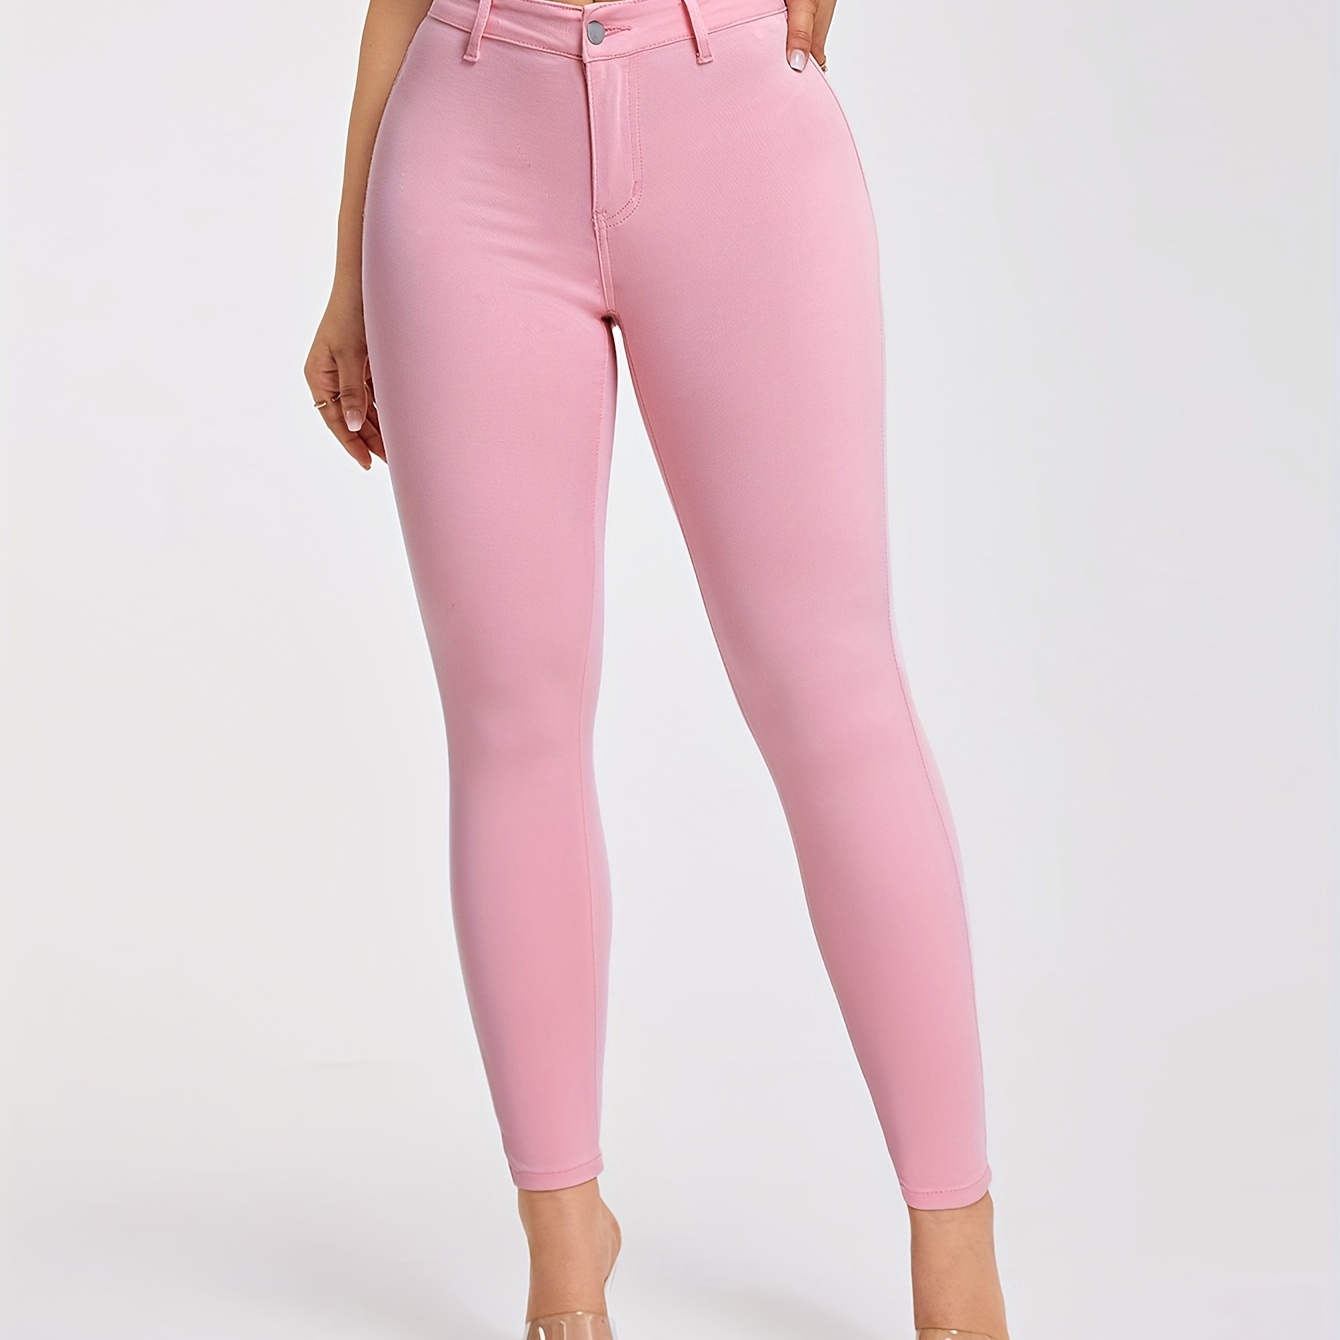 

Plain Peach Color Skinny Jeans, Medium Stretch High Rise Denim Pants, Women's Denim Jeans & Clothing